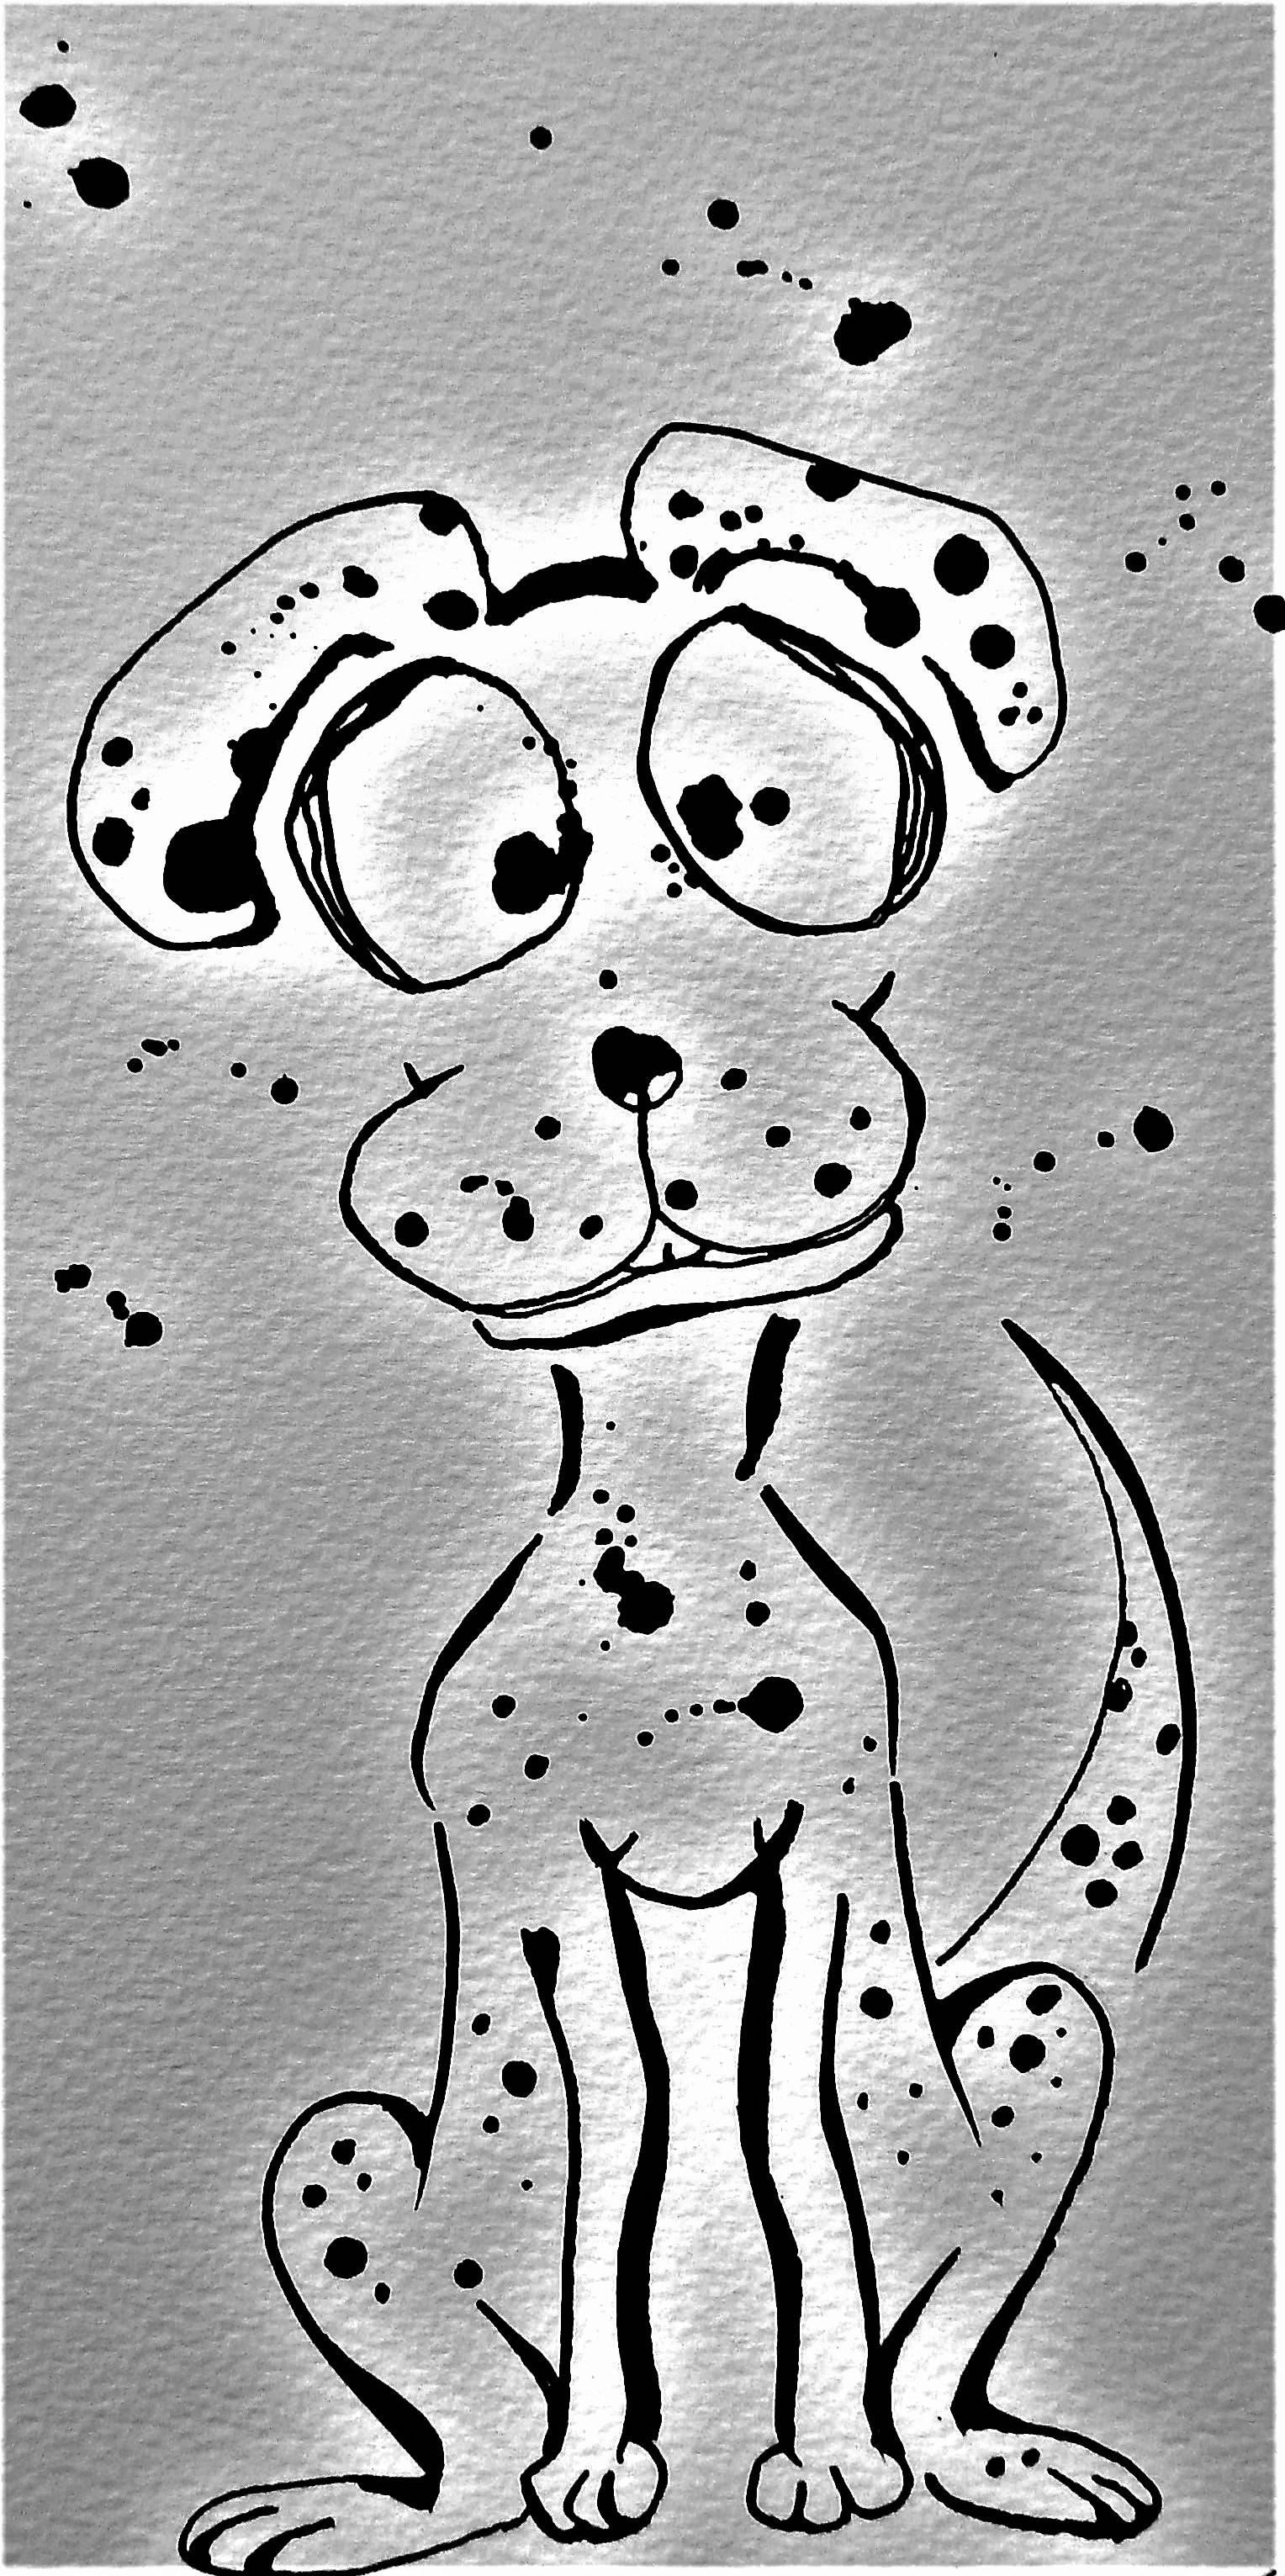 'Dotty The Dalmatian' by Kitty Pigfish (aka LK 'Merlynda' Robinson)